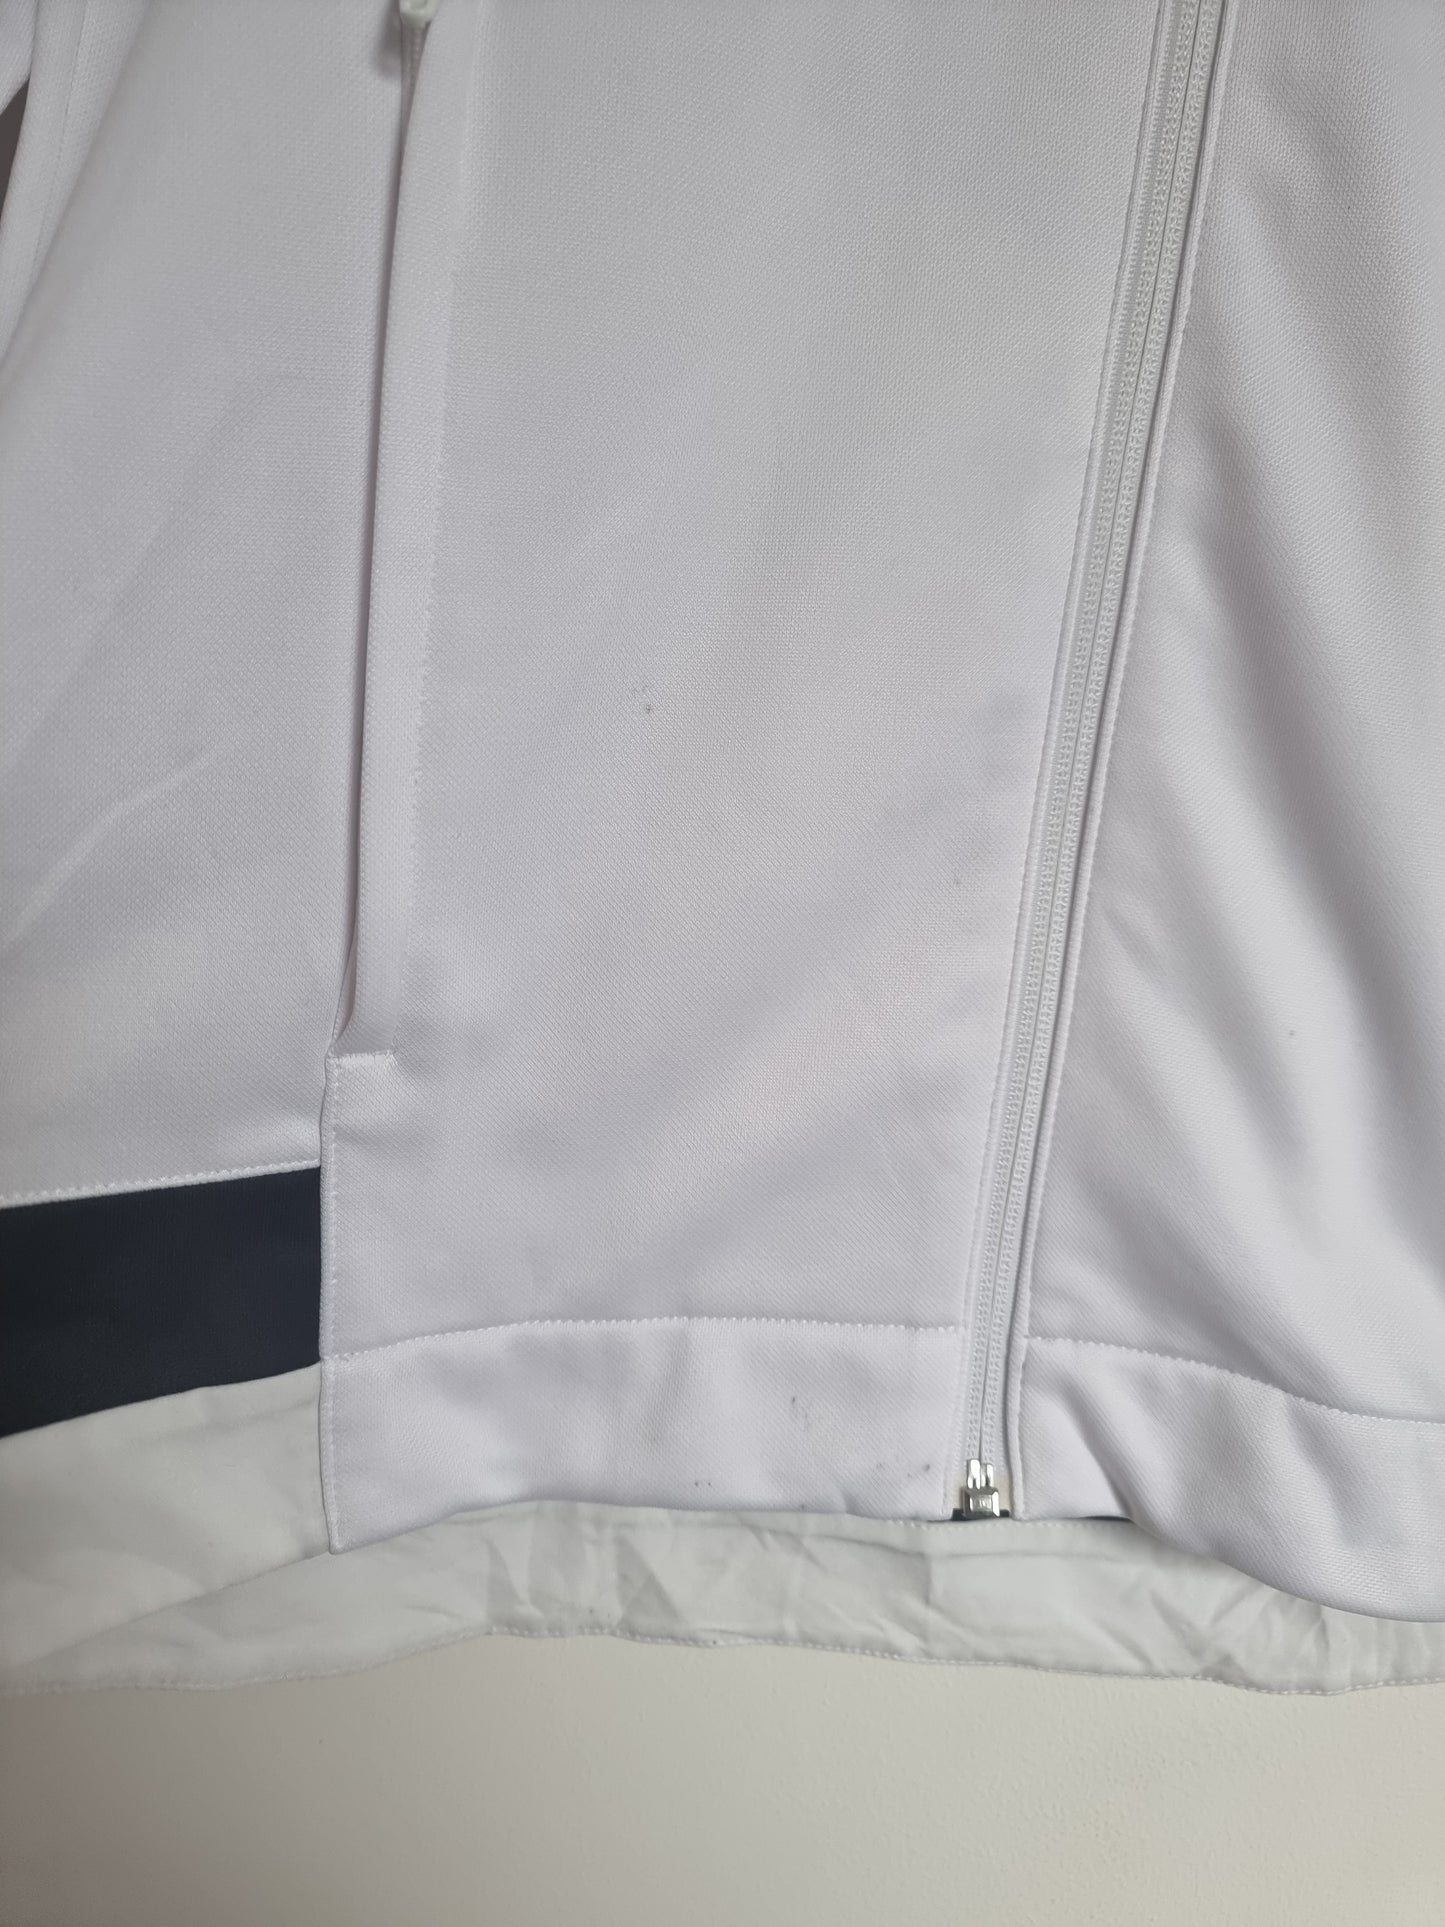 Adidas Juventus 15/16 Track Jacket Small